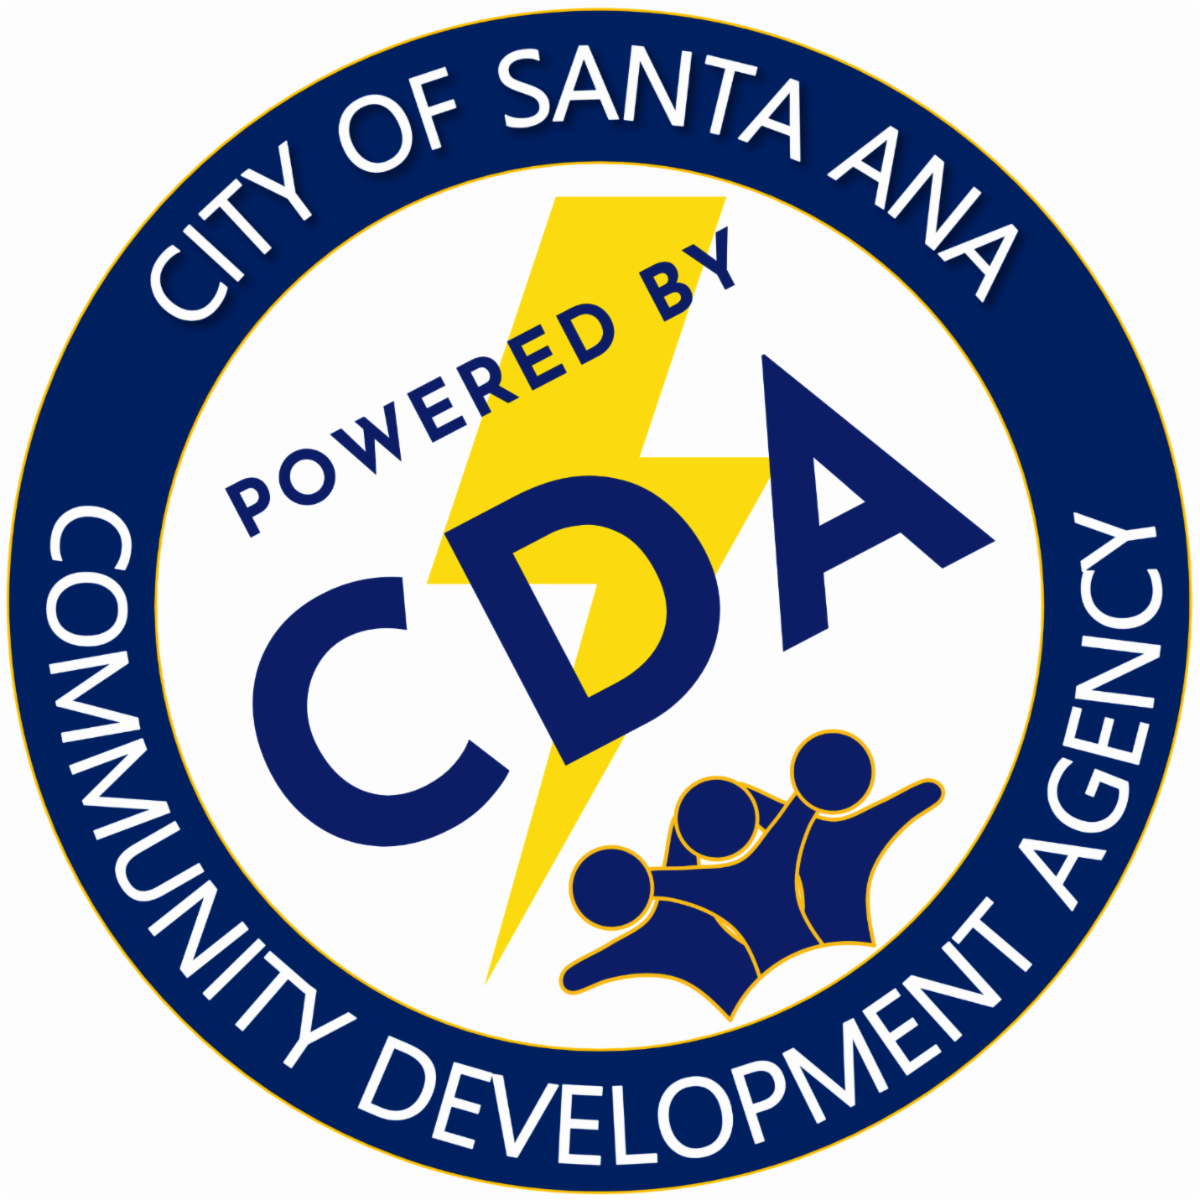 Powered by Community Development Agency logo